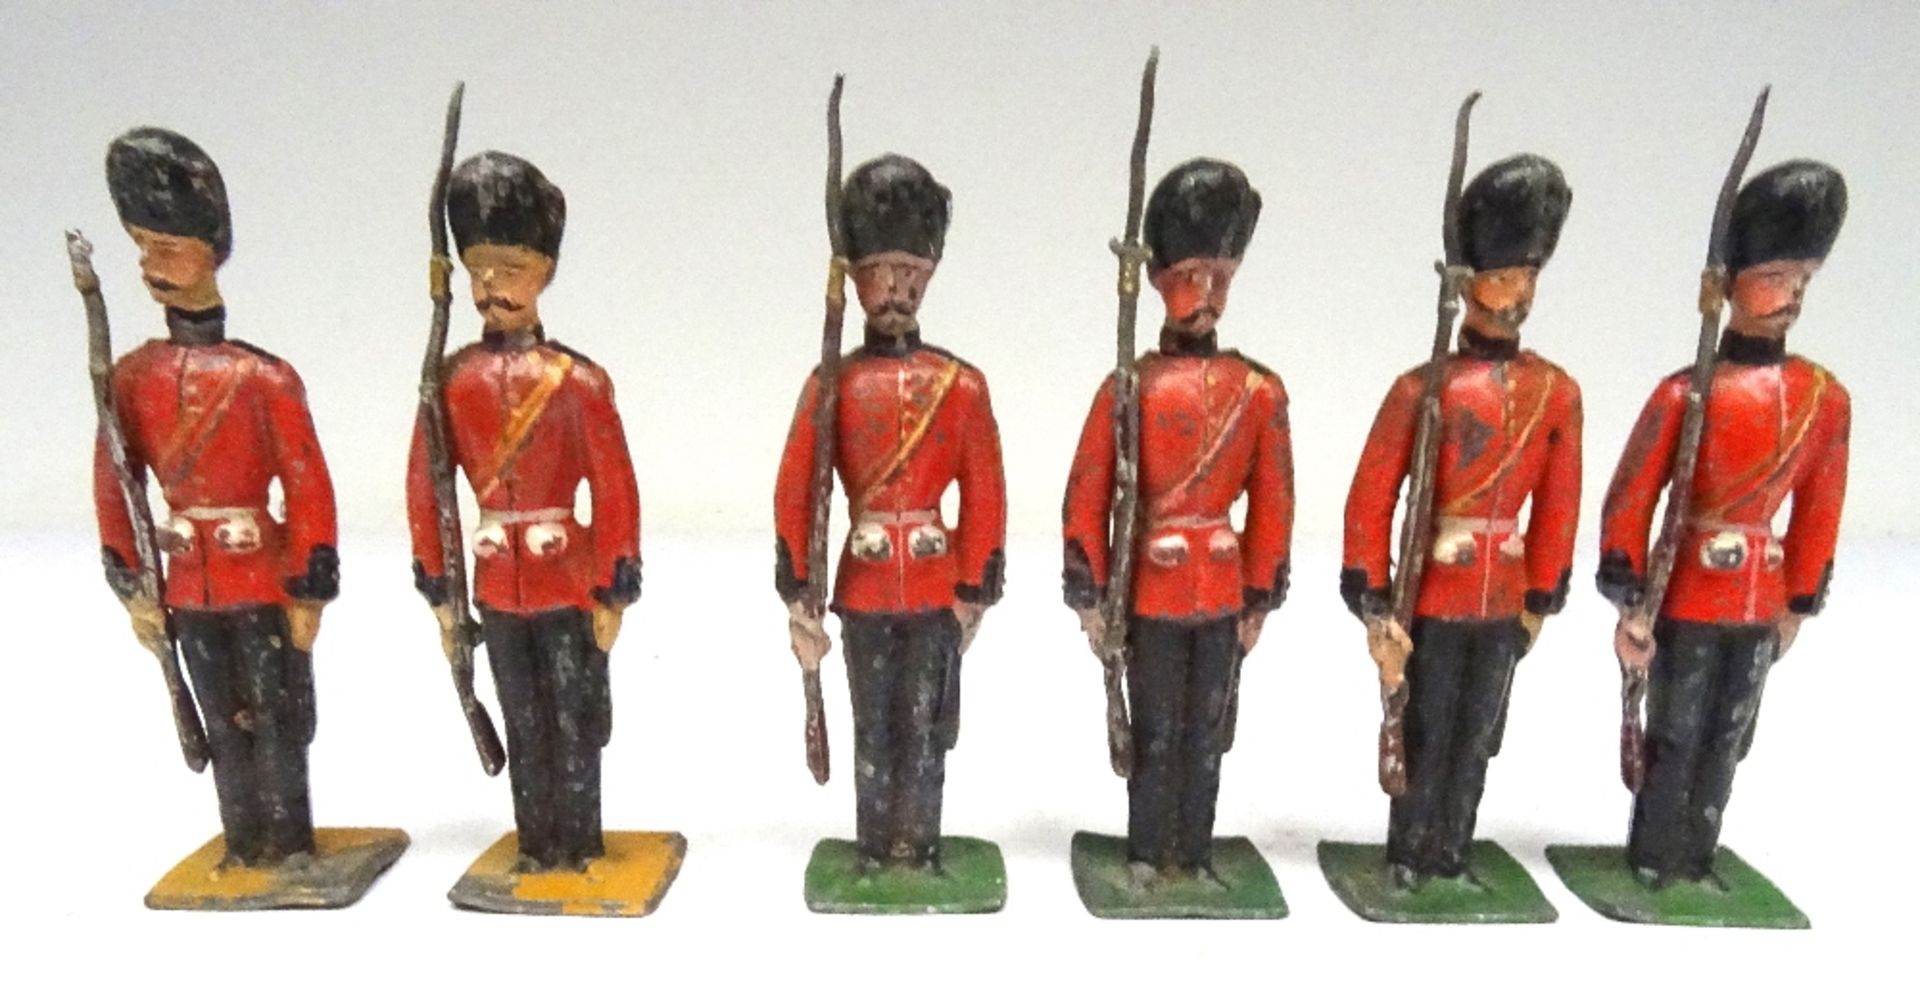 Heyde or similar No.0 size Grenadier Guards